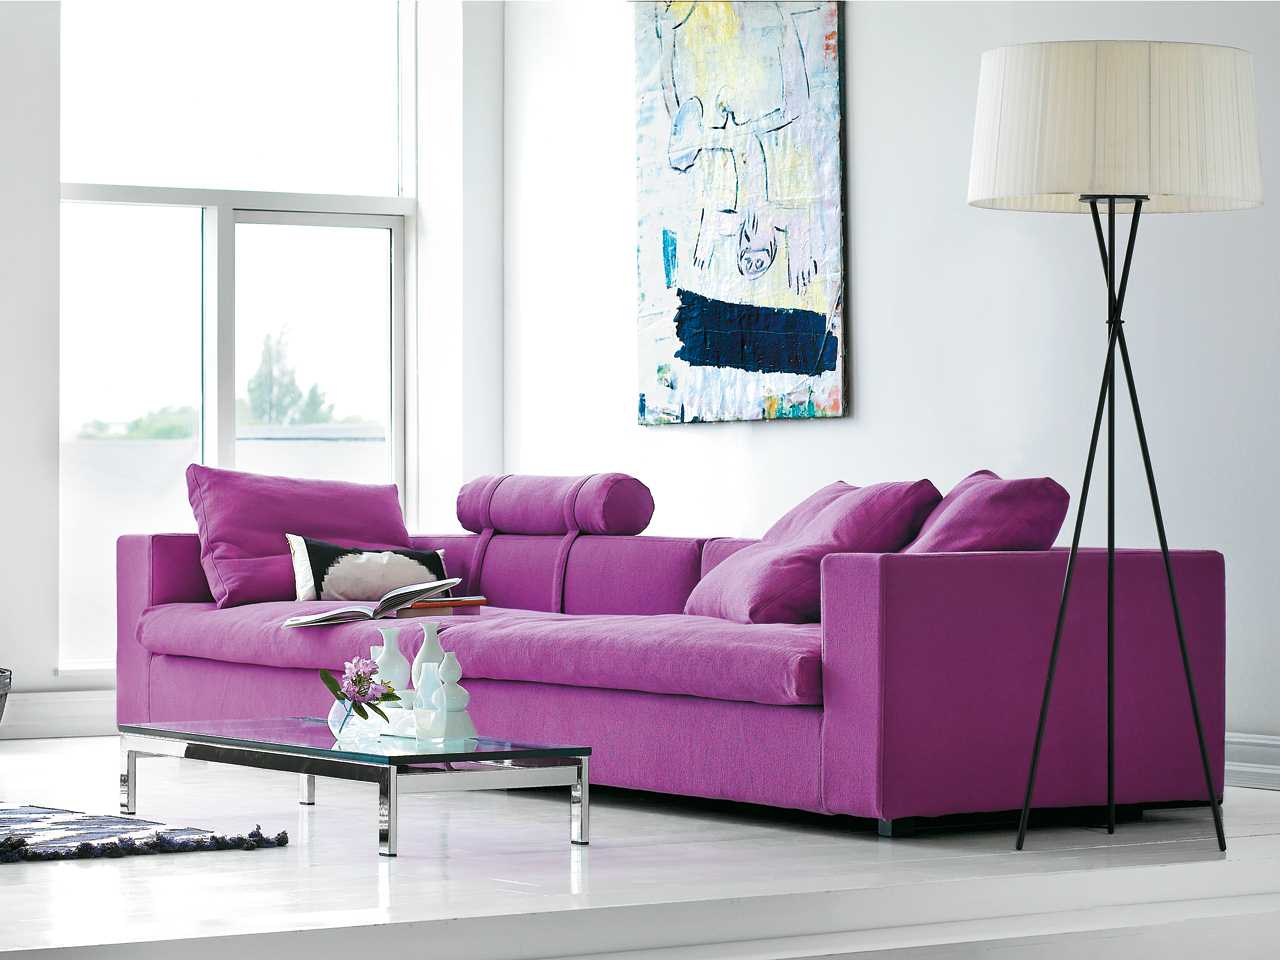 dark purple sofa in the bedroom interior